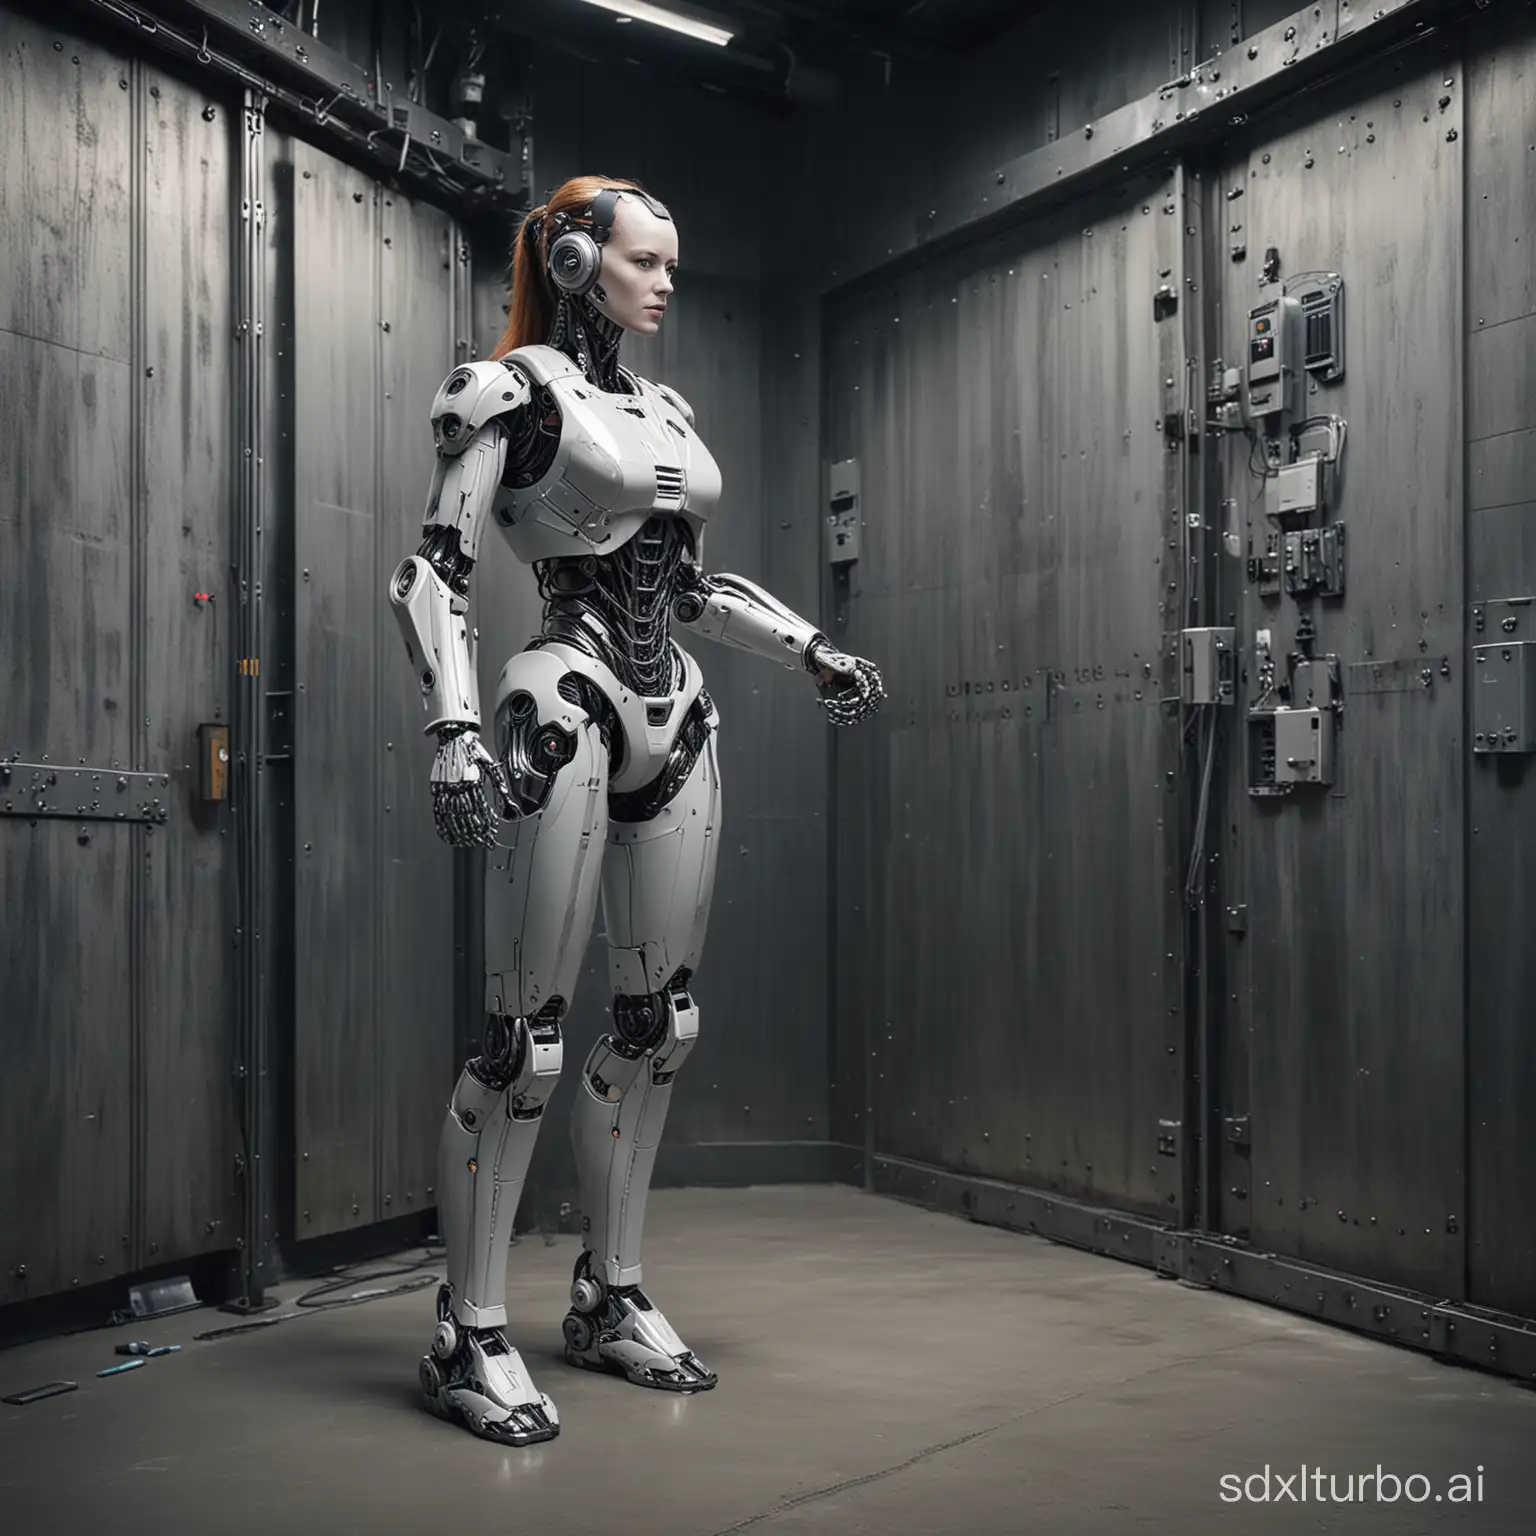 Robotic woman recharging herself standing in a room with metal walls